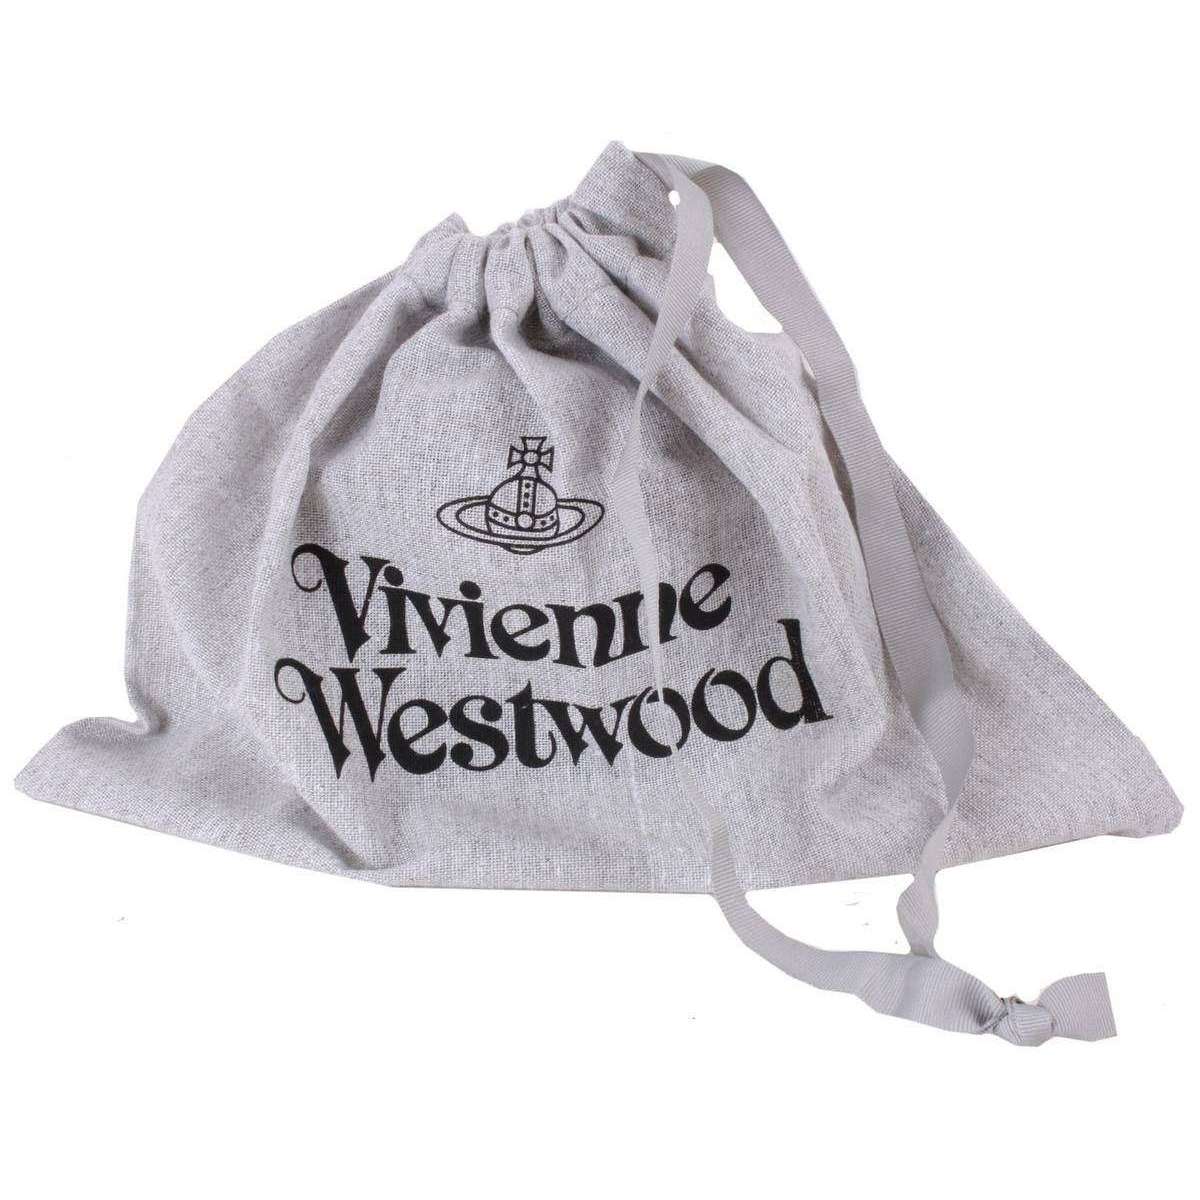 Vivienne Westwood Heart Crossbody bag saffiano cow leather black -  52030007-L001N-N403